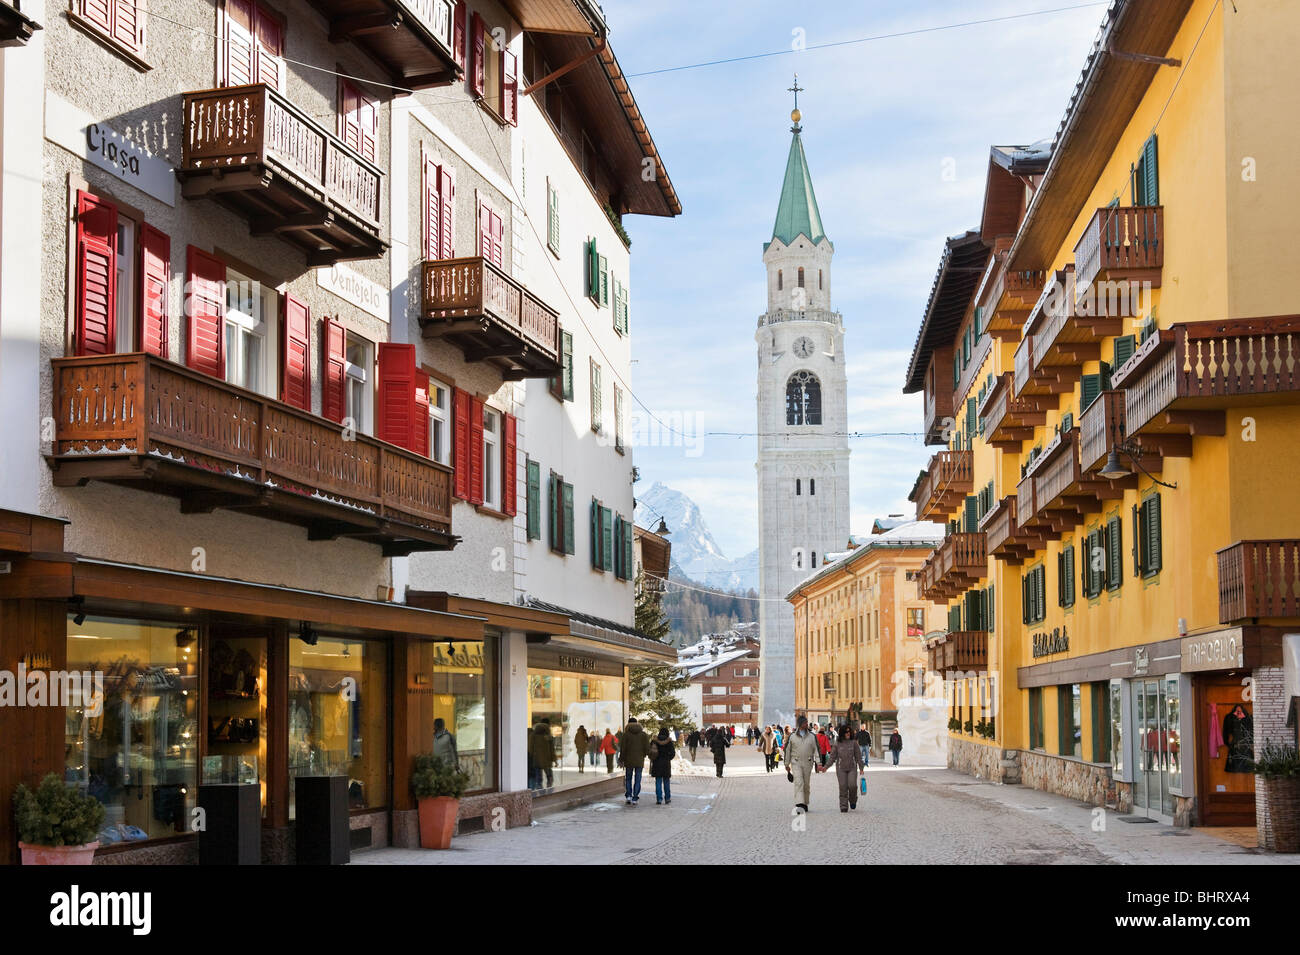 Corso Italia, the main street in the town centre, Cortina d'Ampezzo, Dolomites, Italy Stock Photo